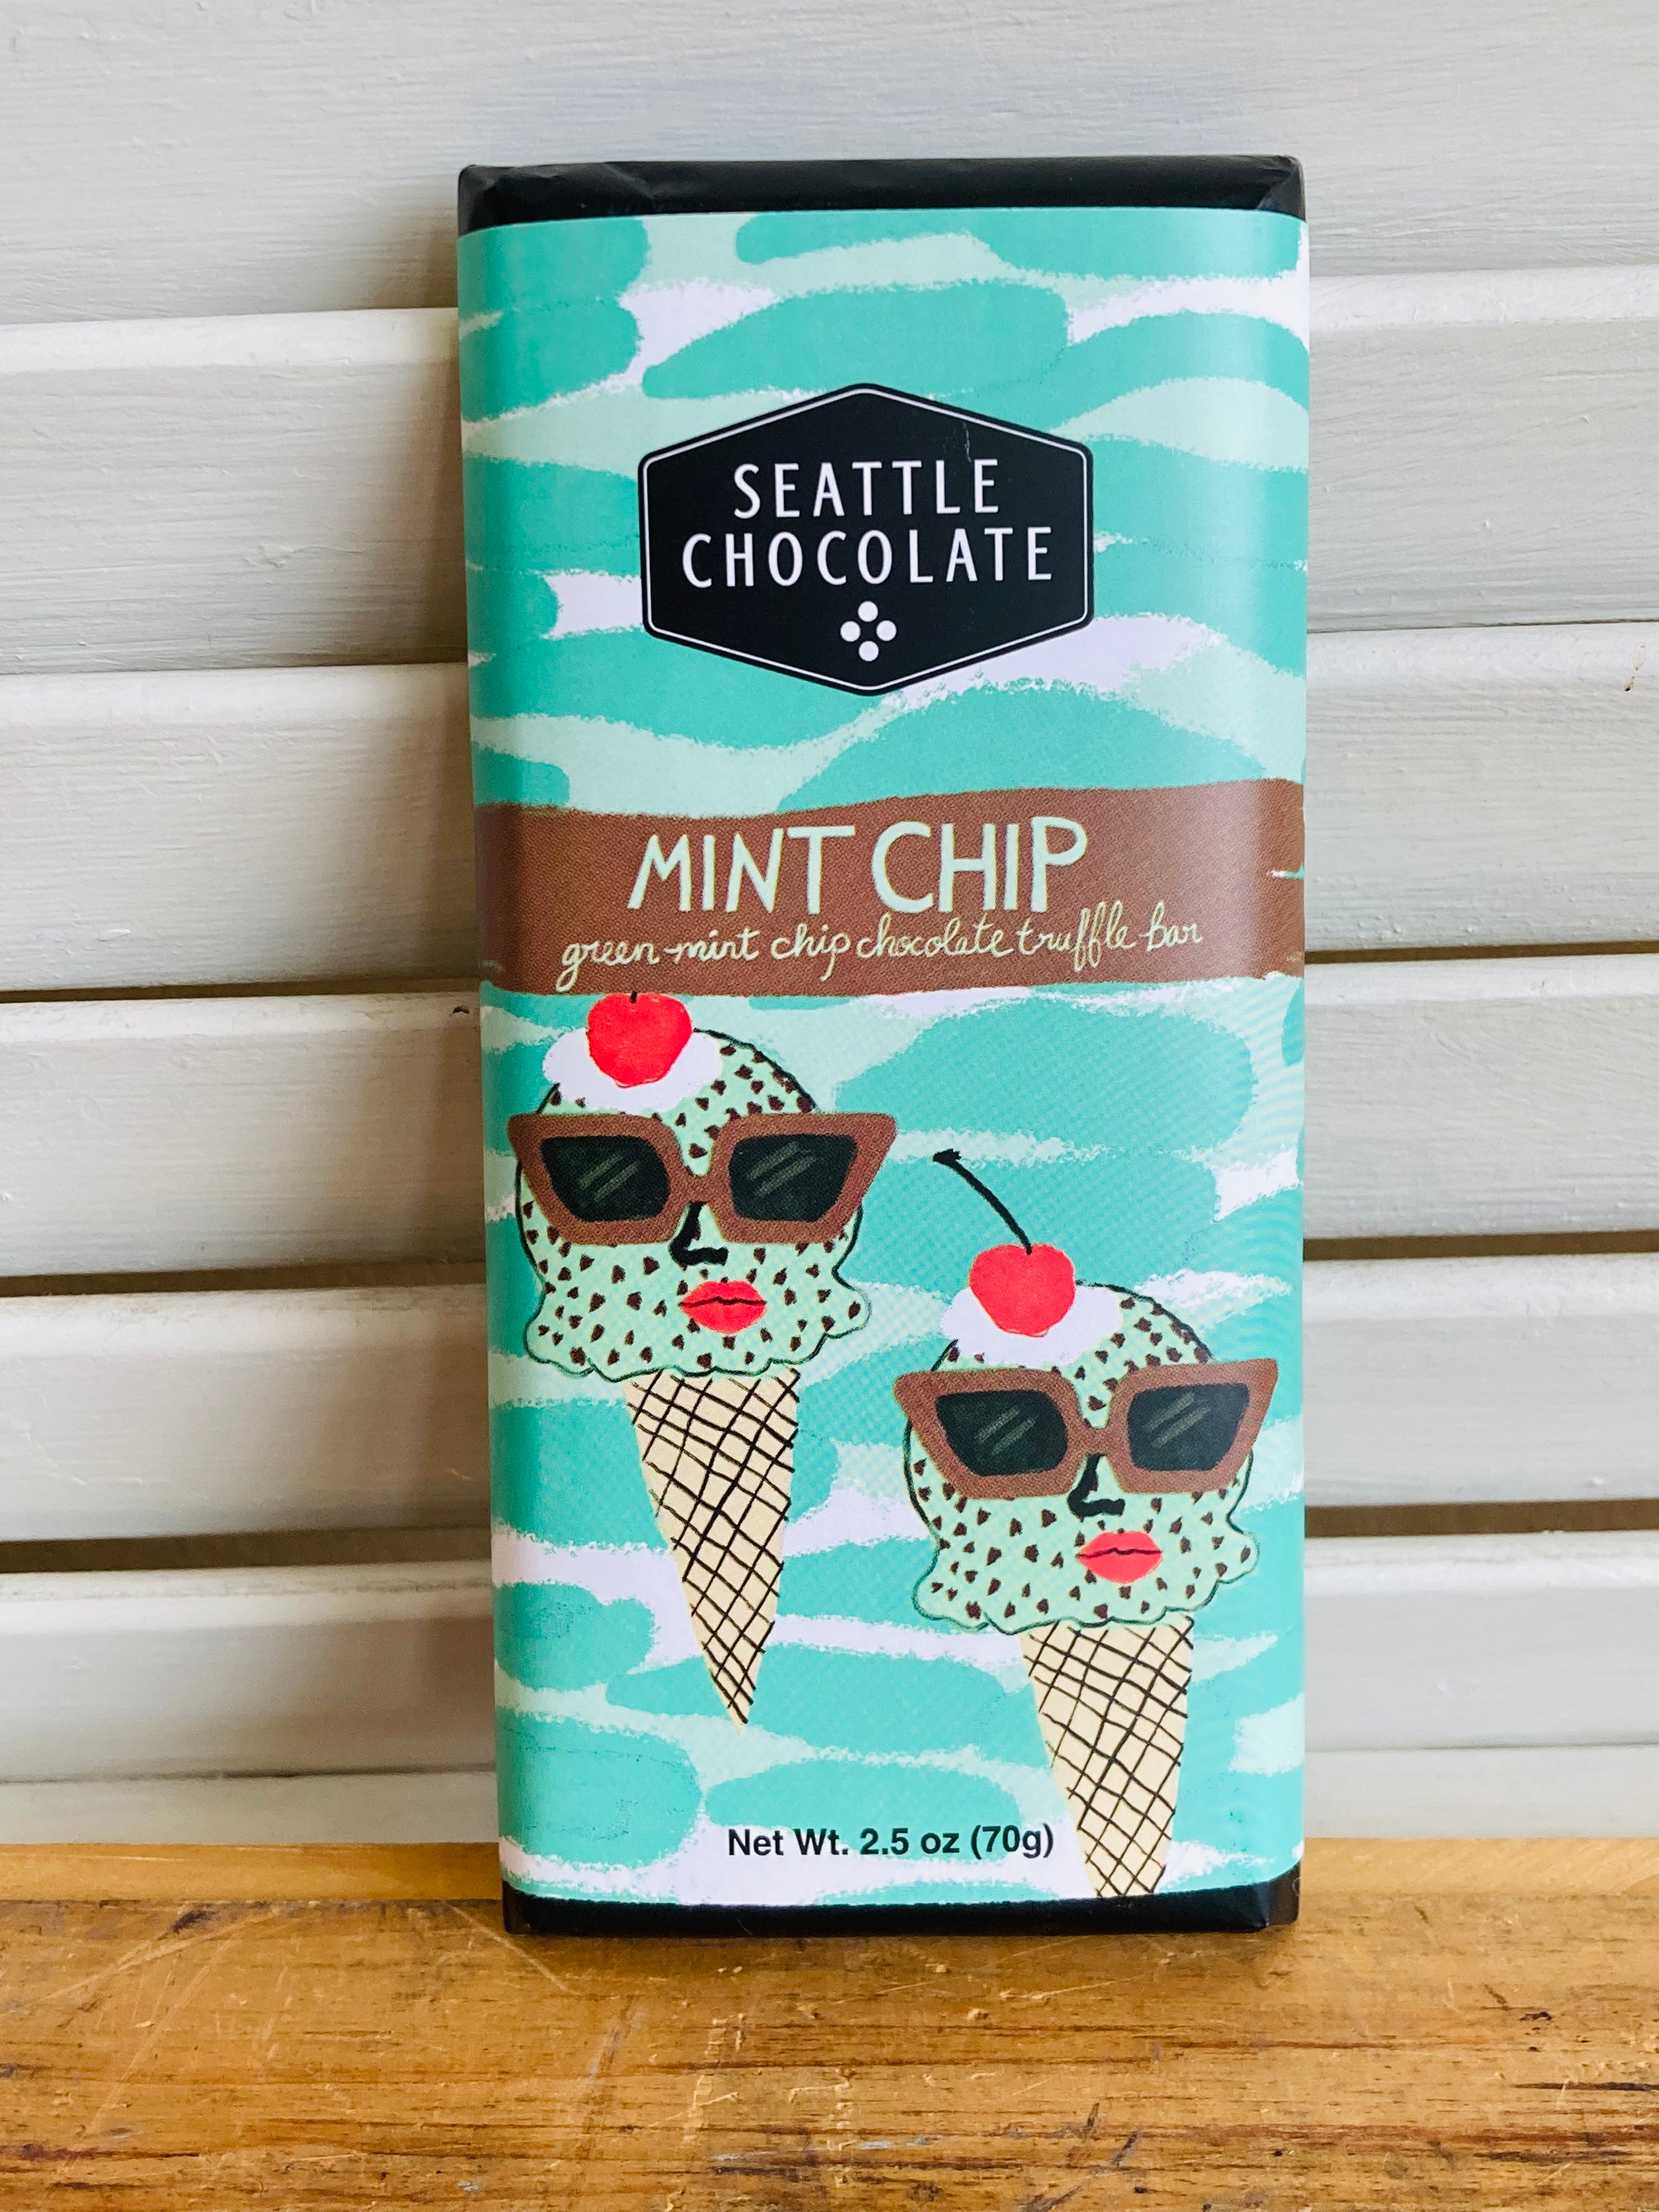 Mint Chip - Seattle Chocolate truffle bar